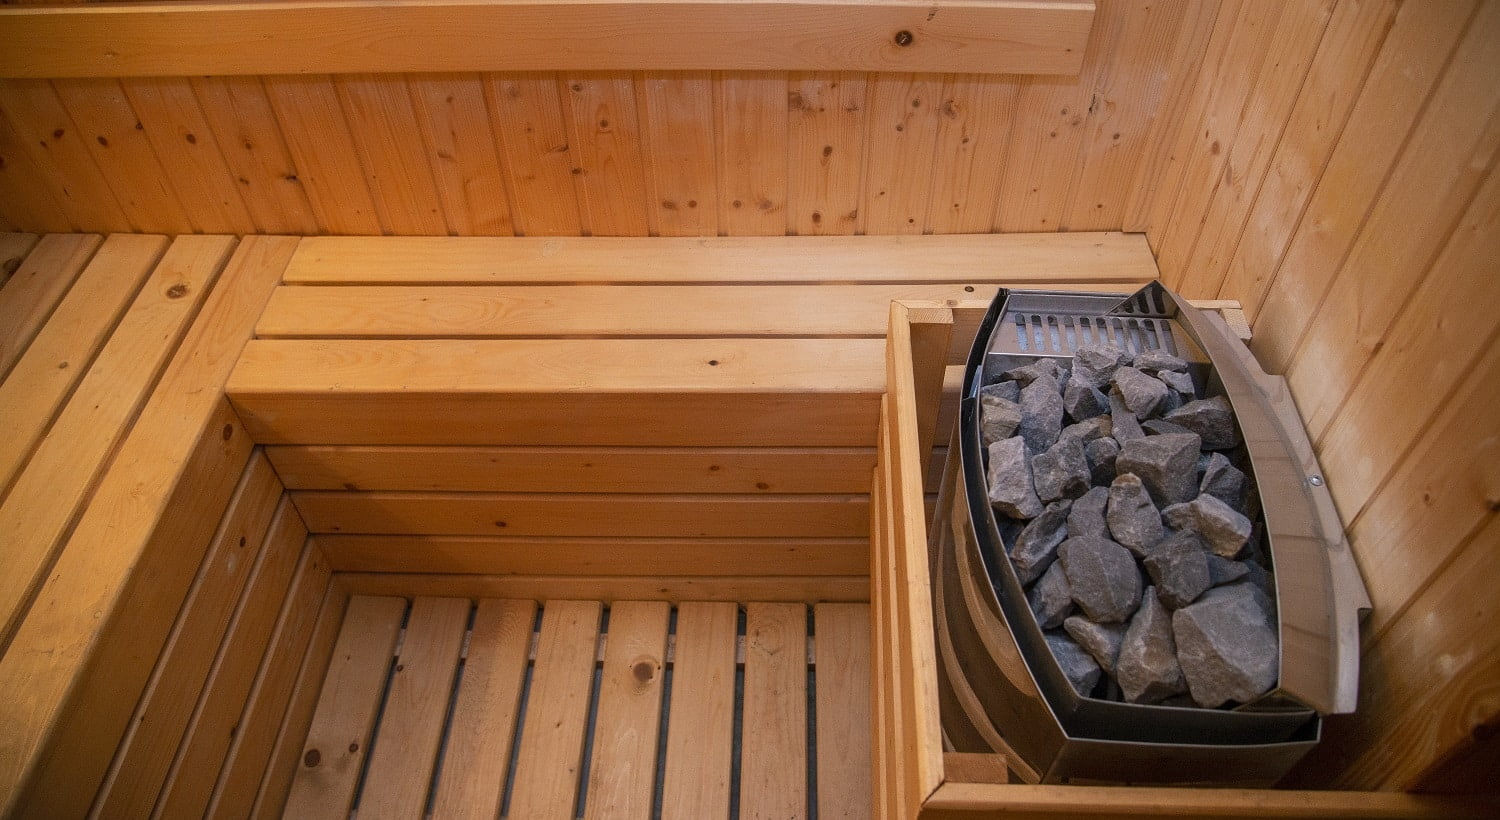 Coal in the sauna Used to add heat to the sauna